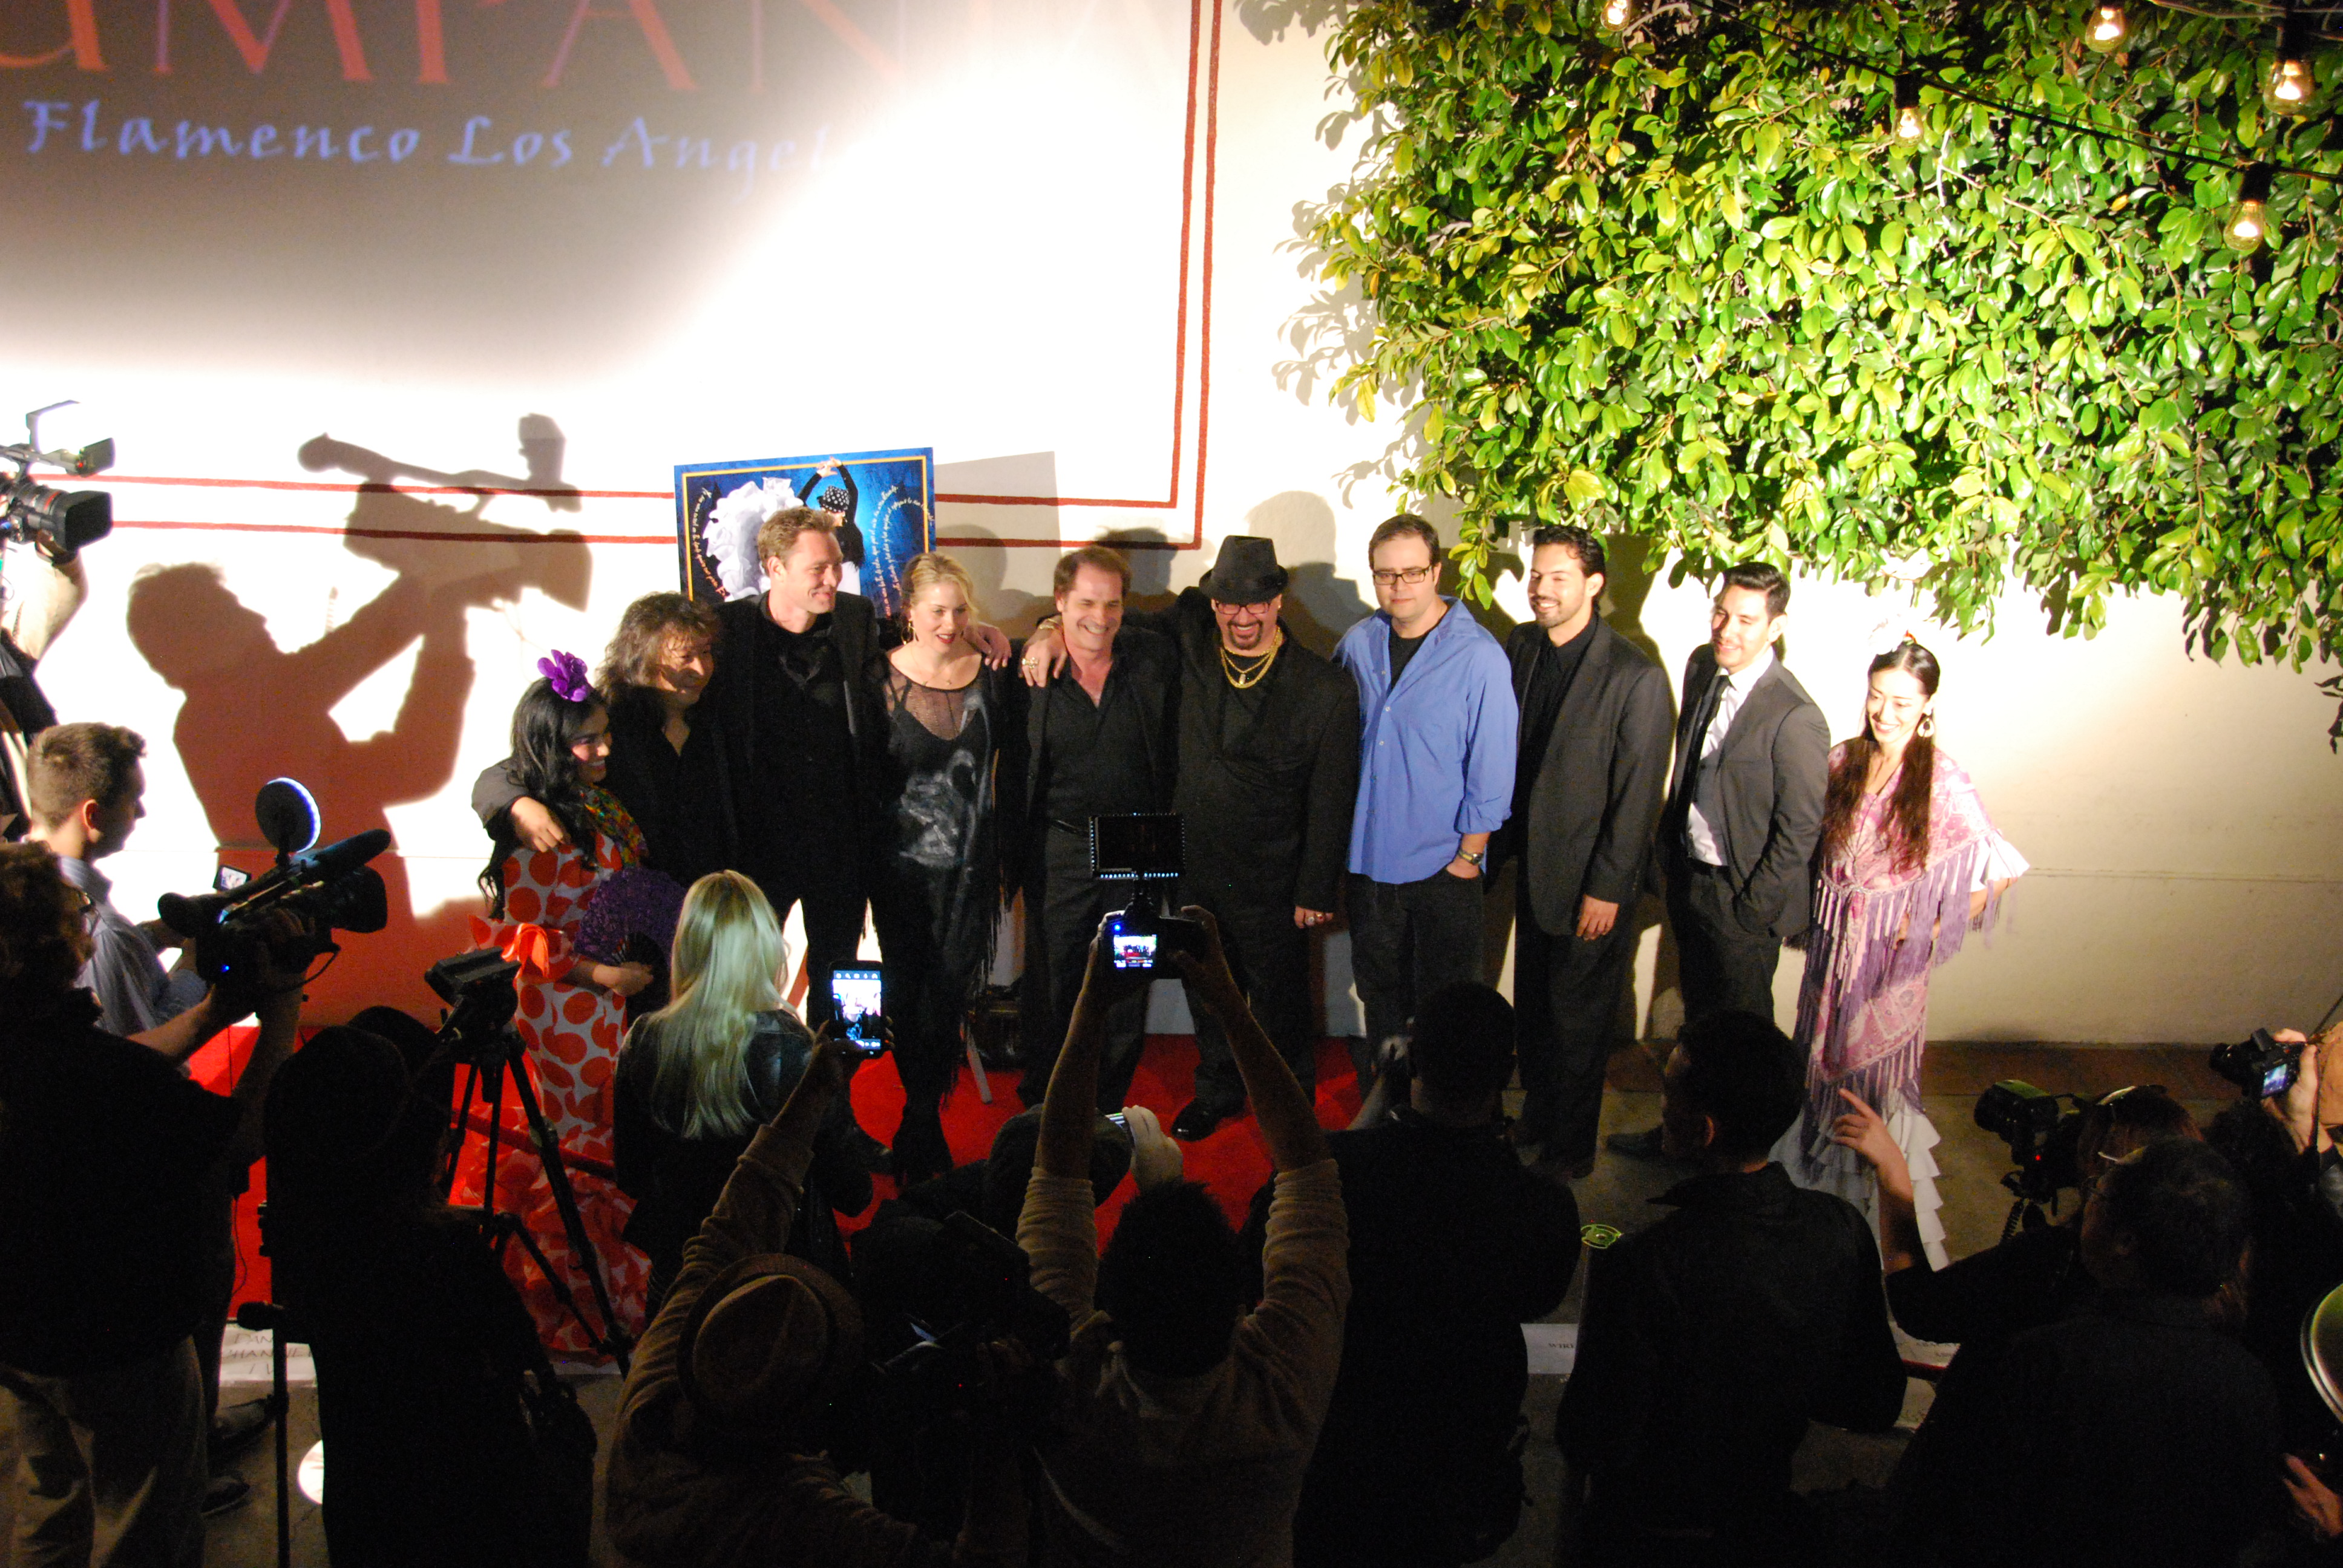 Premiere at El Cid 2013: Cast of KUMPANIA Flamenco Los Angeles